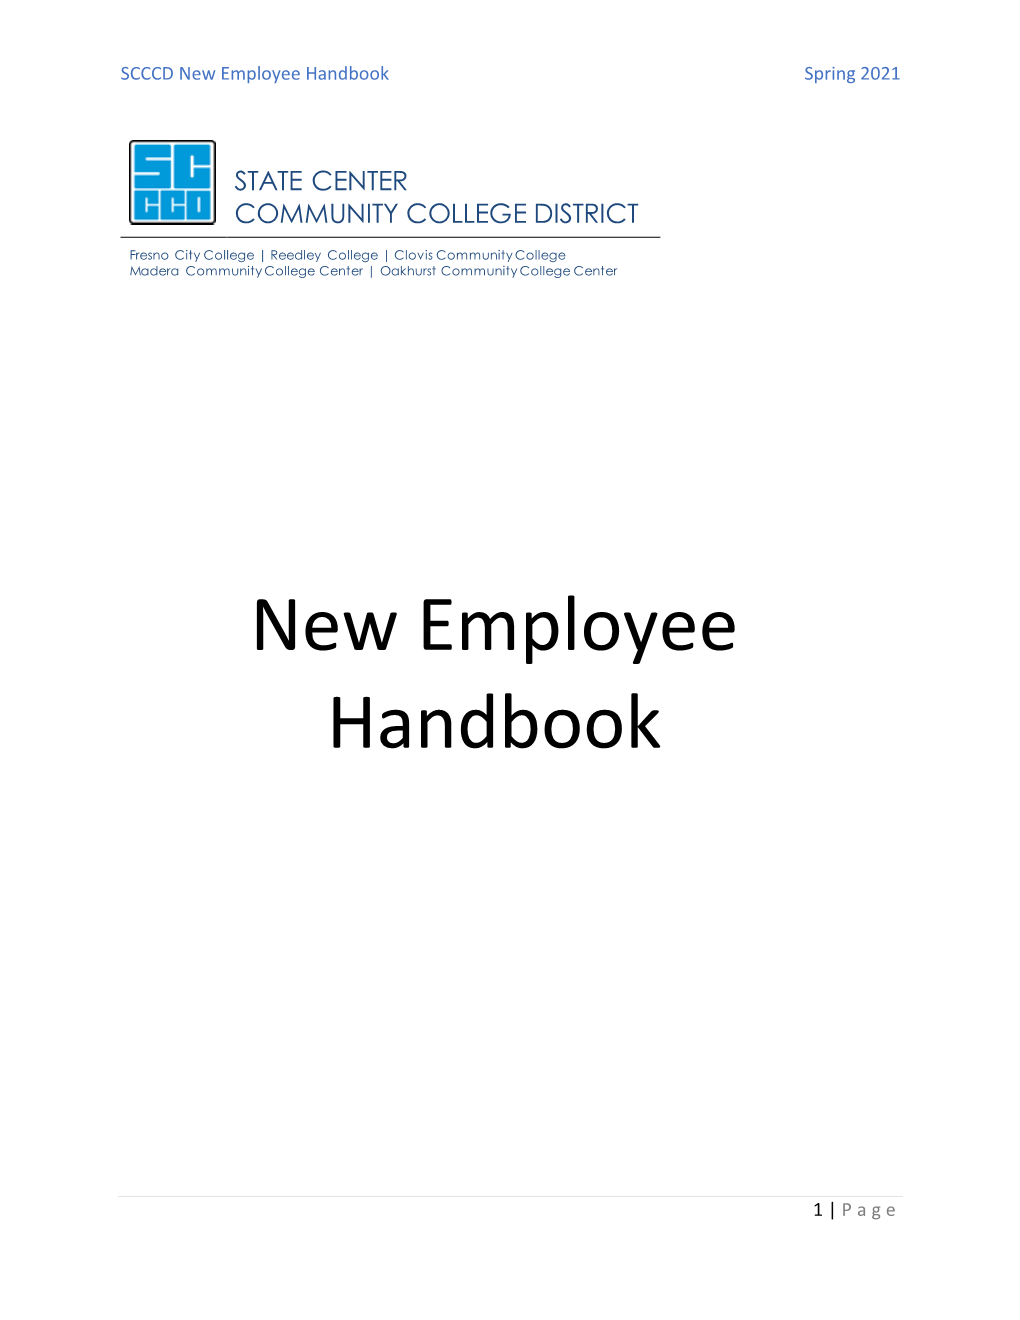 SCCCD New Employee Handbook Spring 2021